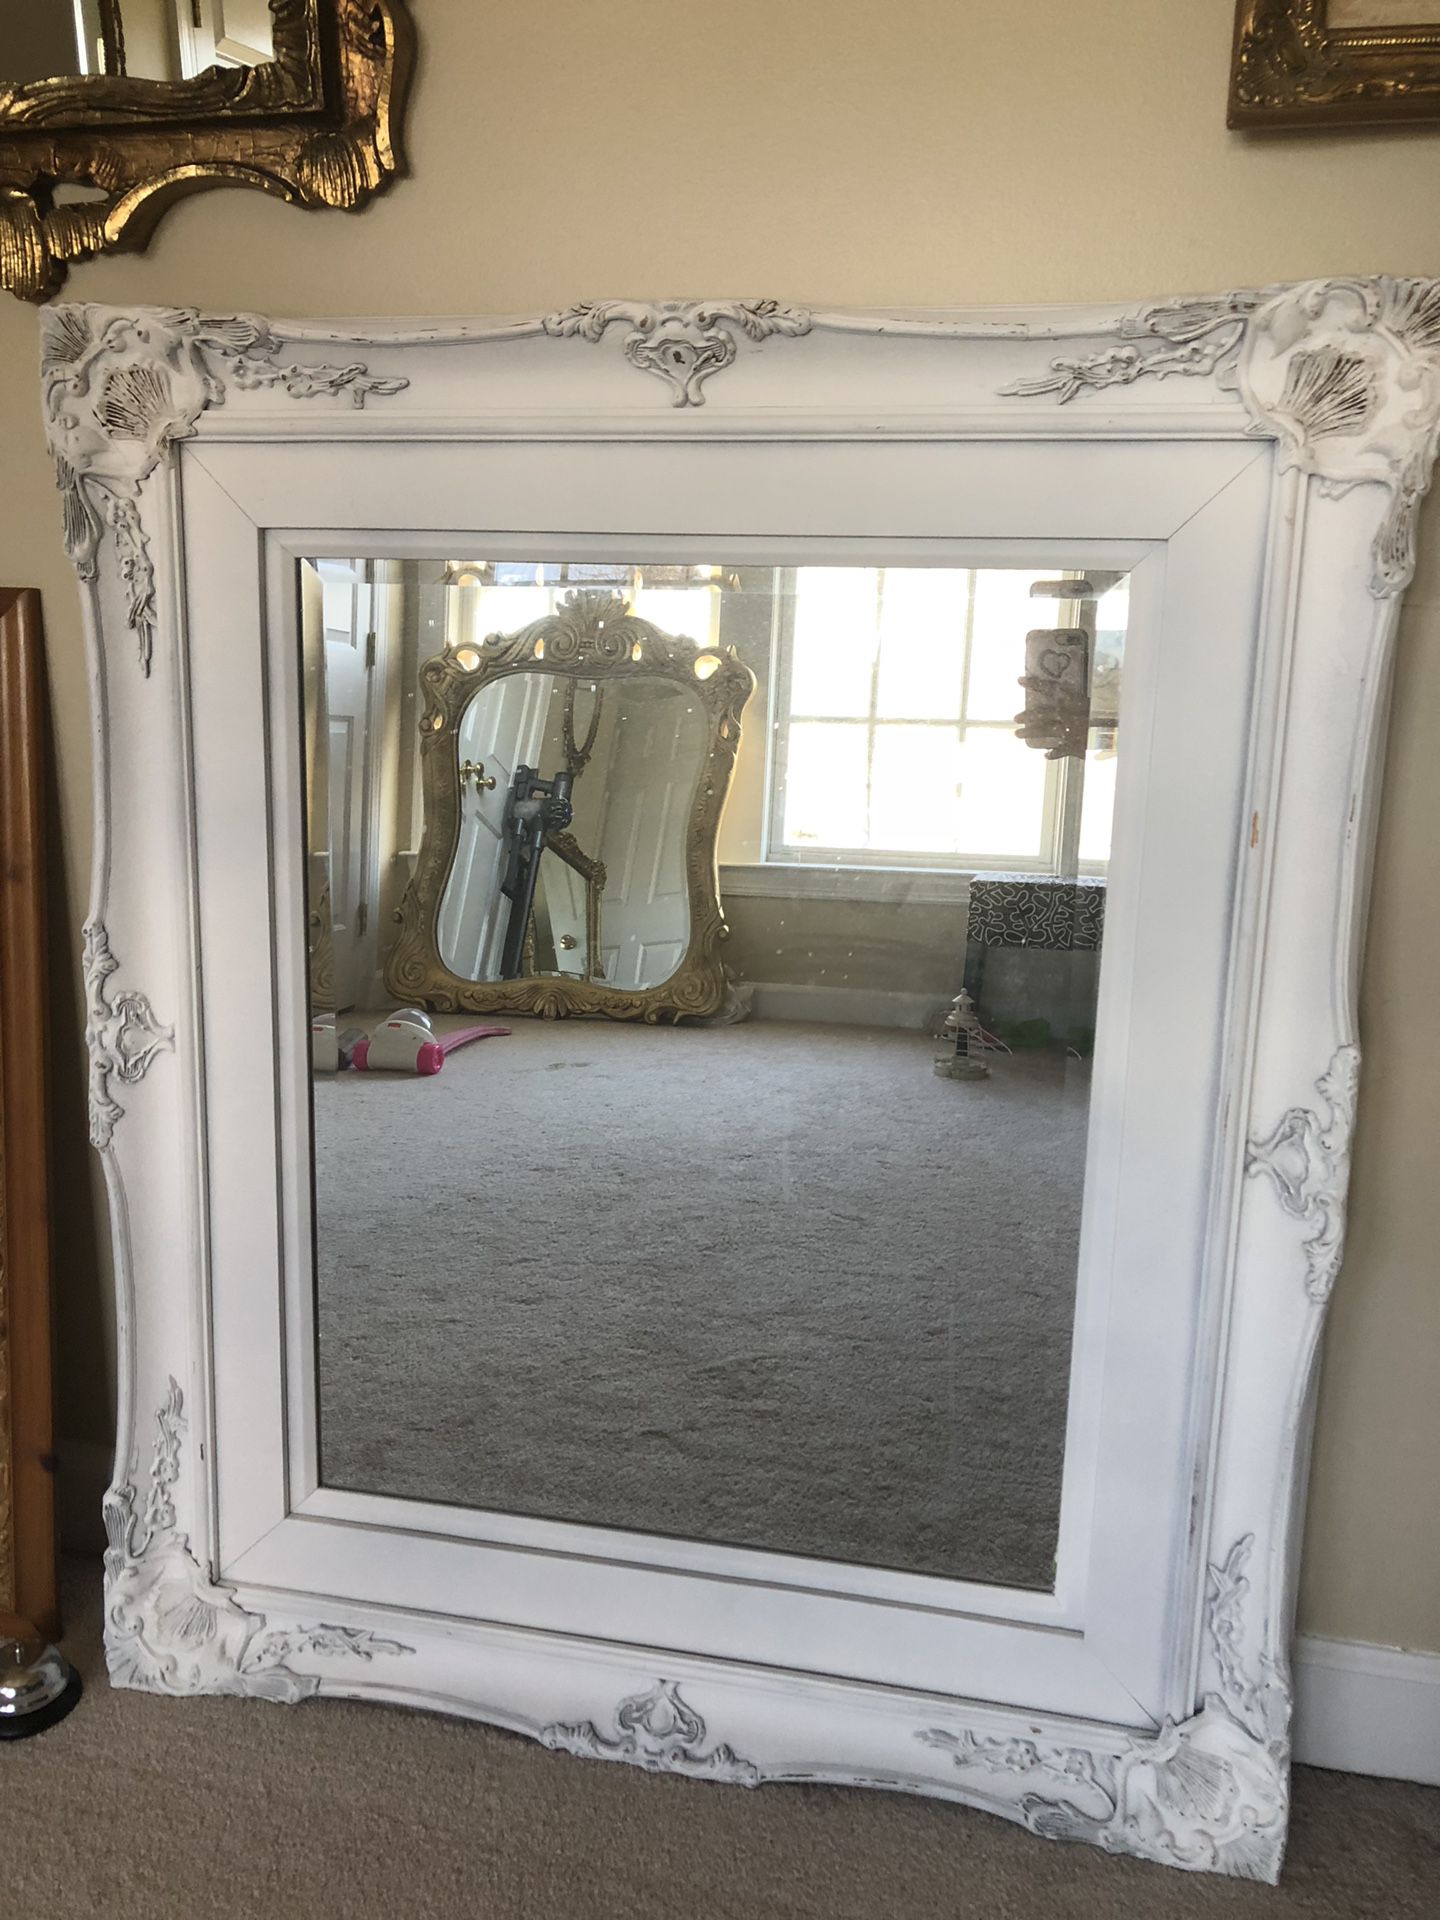 42”X36”Antique french wooden mirror